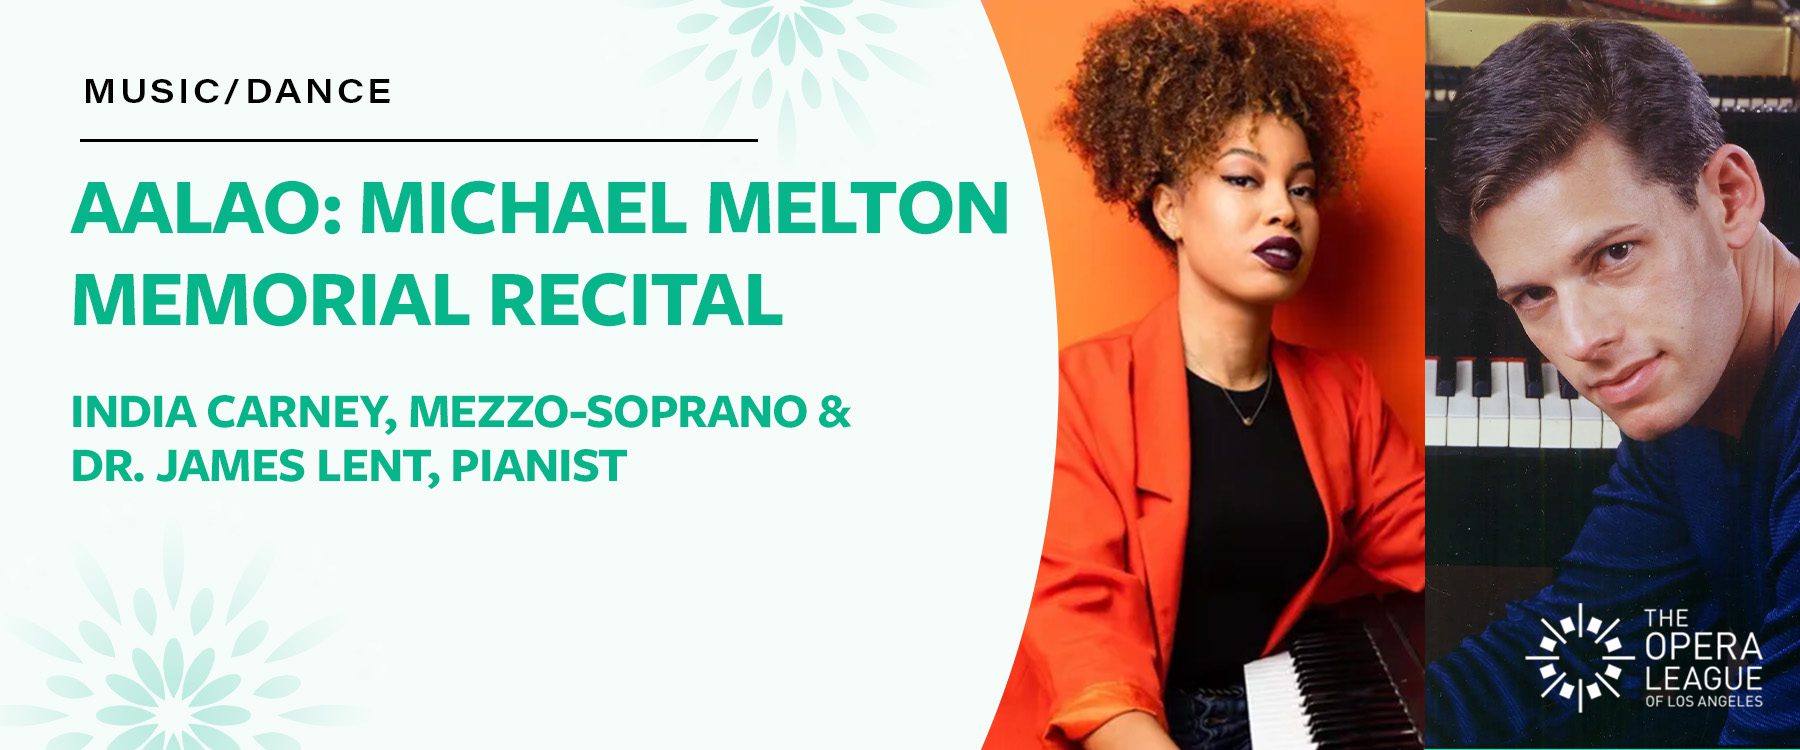 AALAO: Michael Melton Memorial Recital